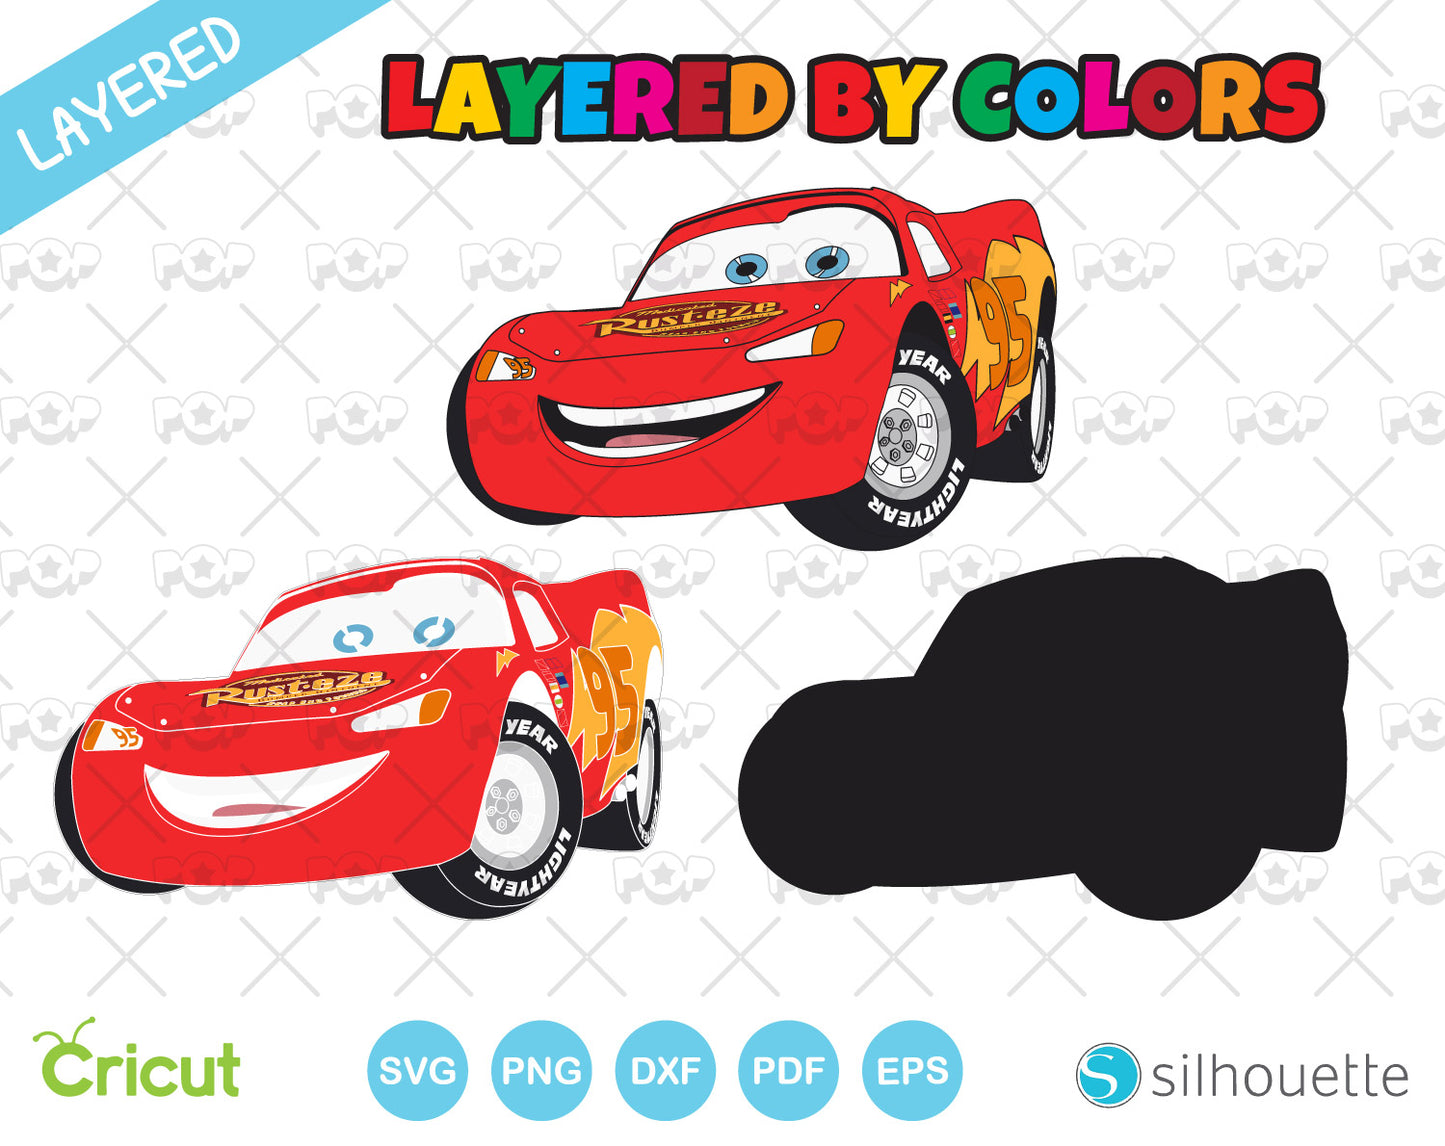 Cars clipart bundle, Disney Cars SVG cut files for Cricut / Silhouette, PNG DXF, instant download